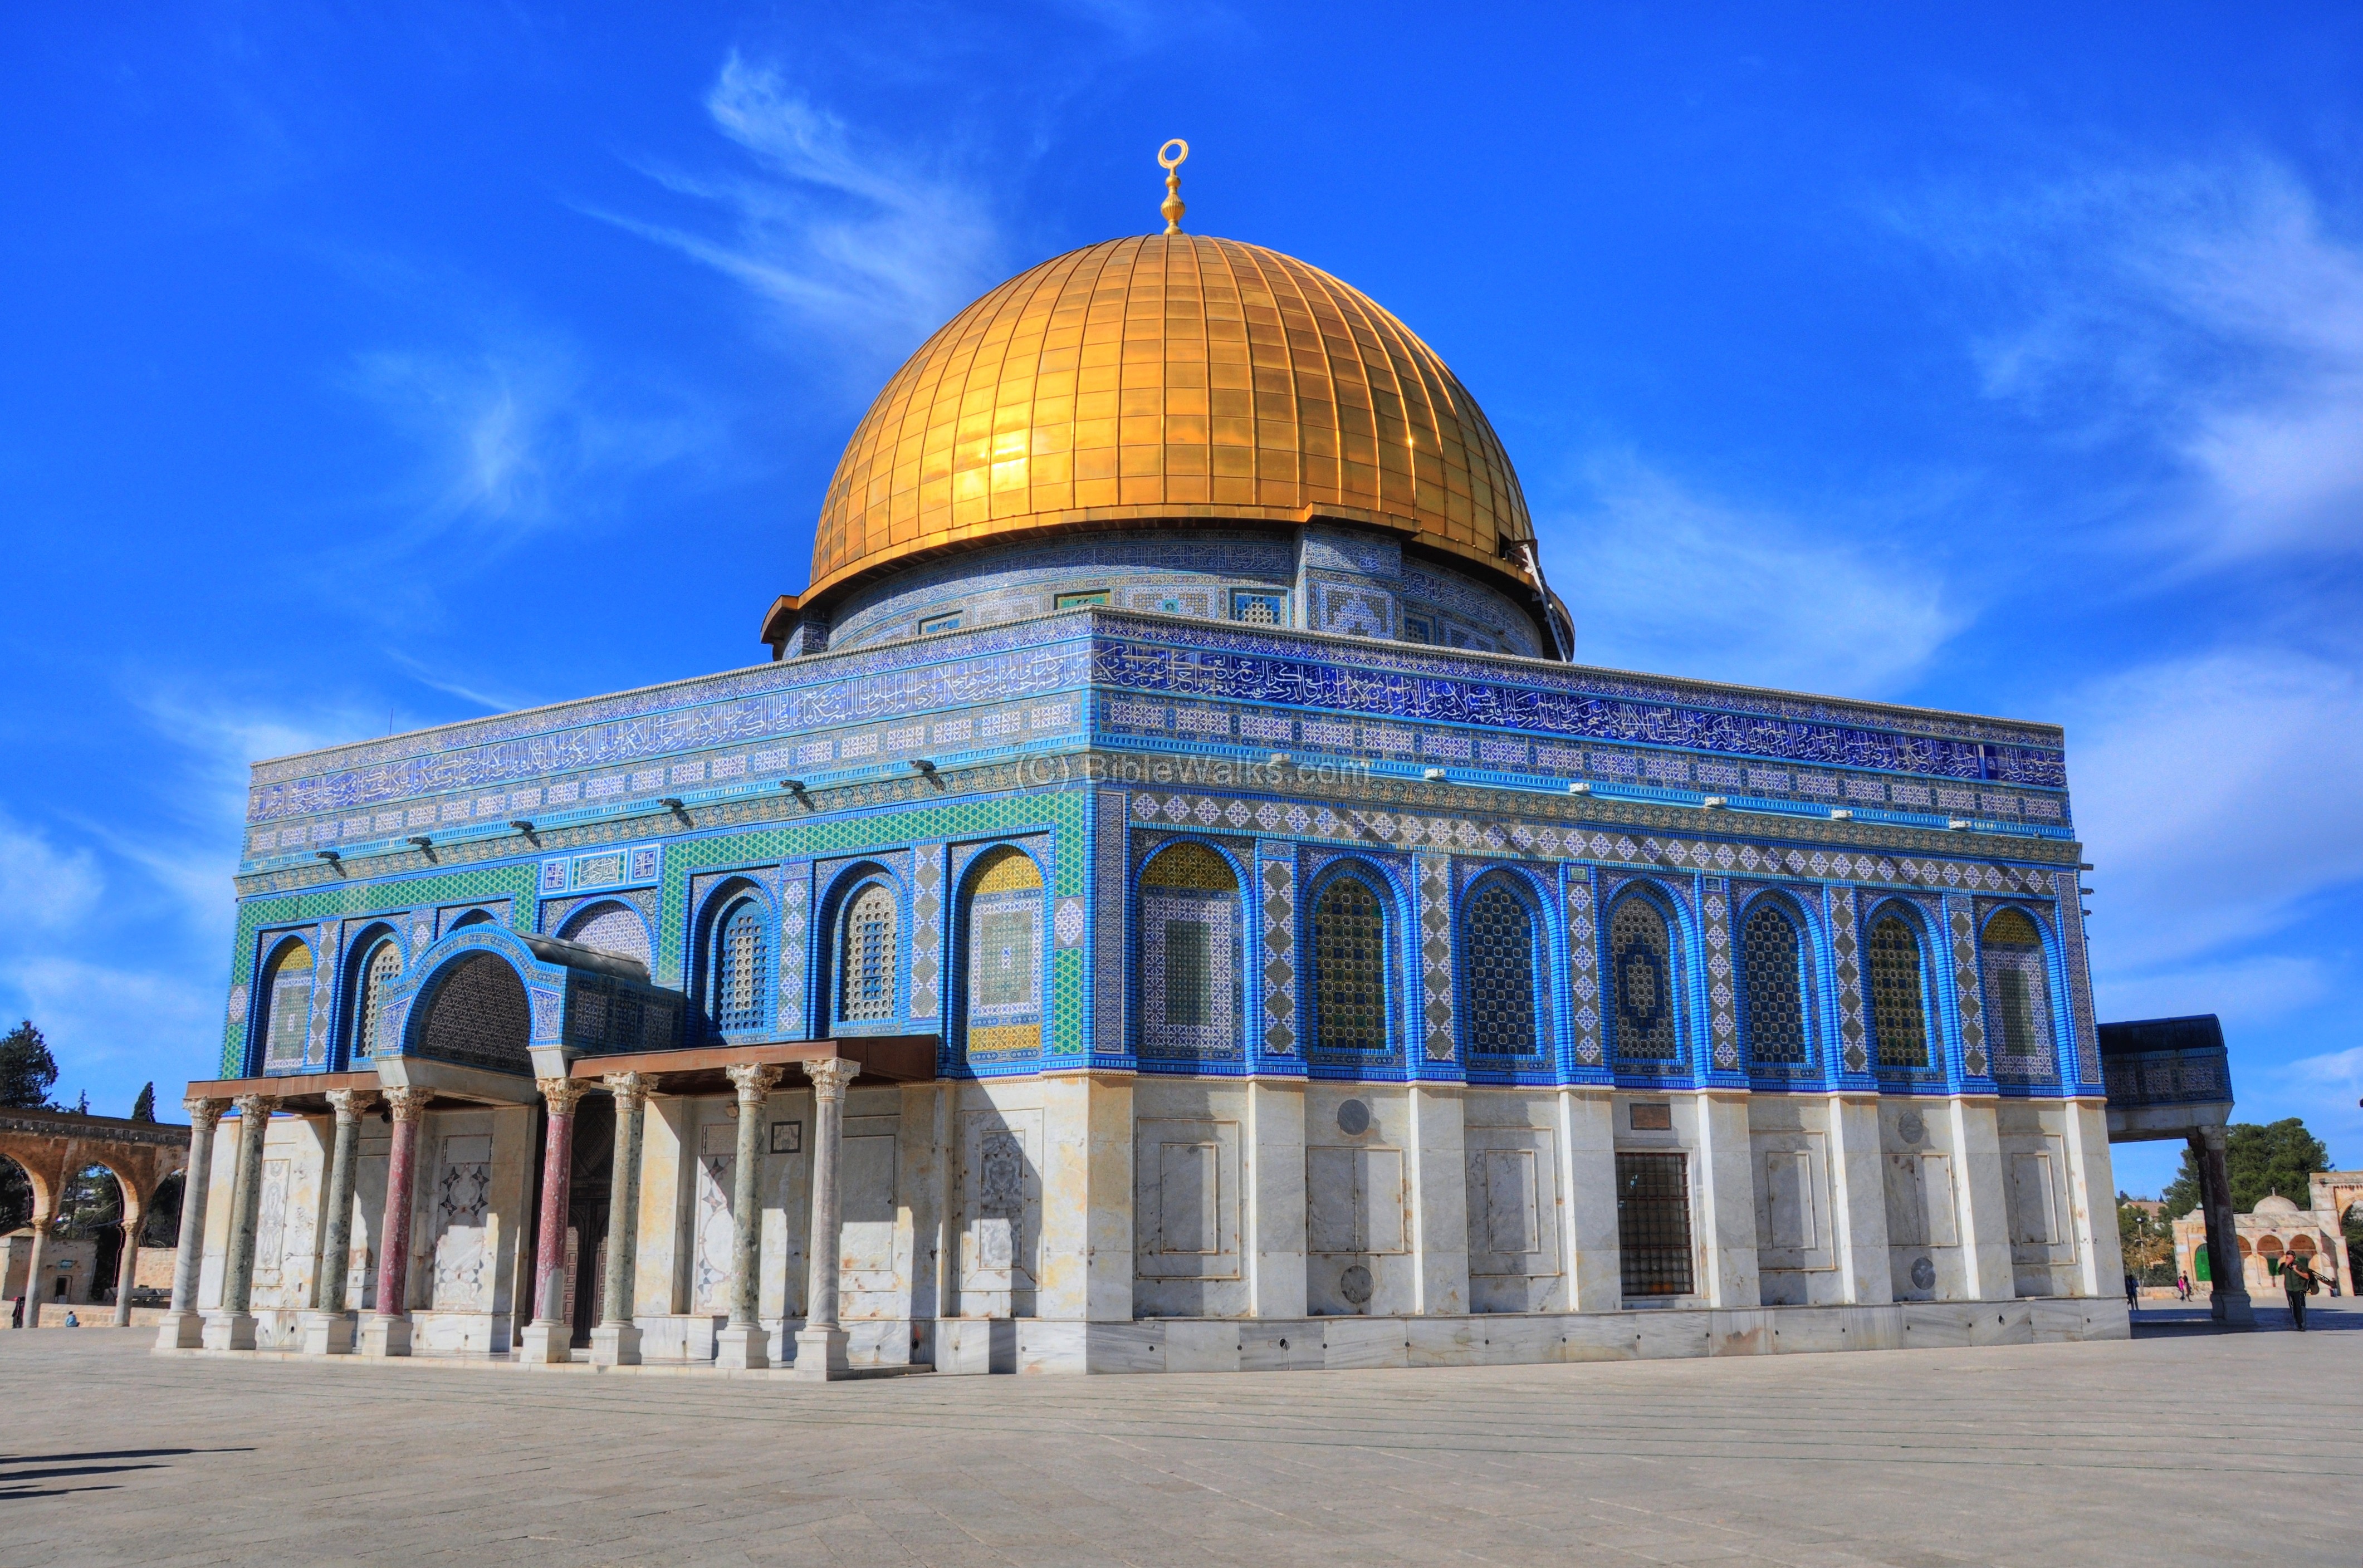 Dome of the Rock shrine, Jerusalem